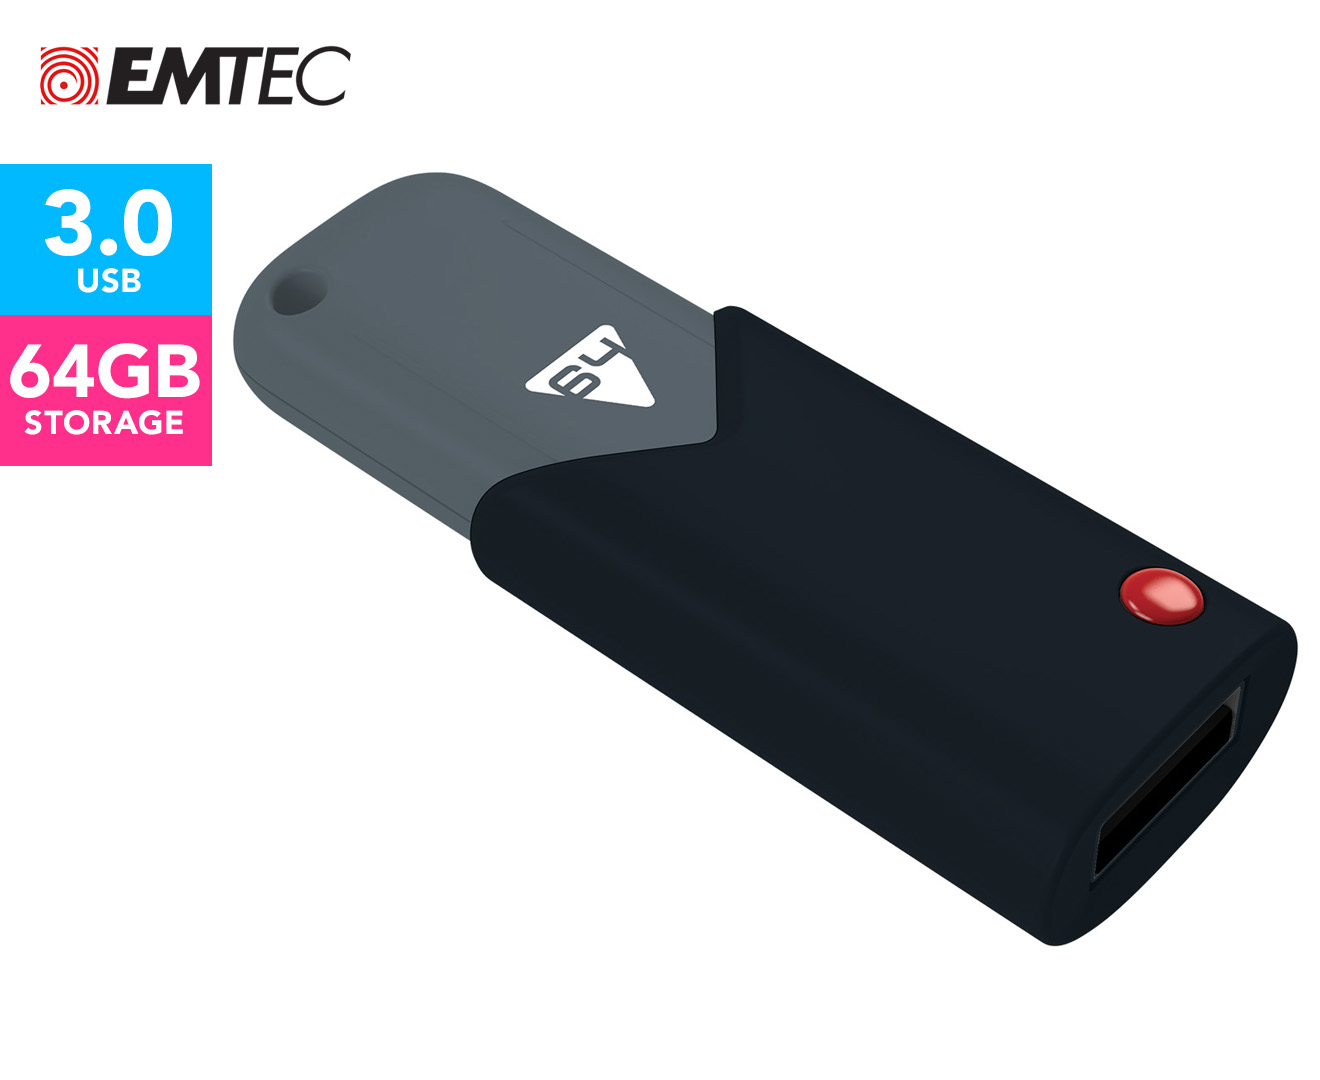 EMTEC B100 USB 3.0 64GB Flash Drive - Black/Grey